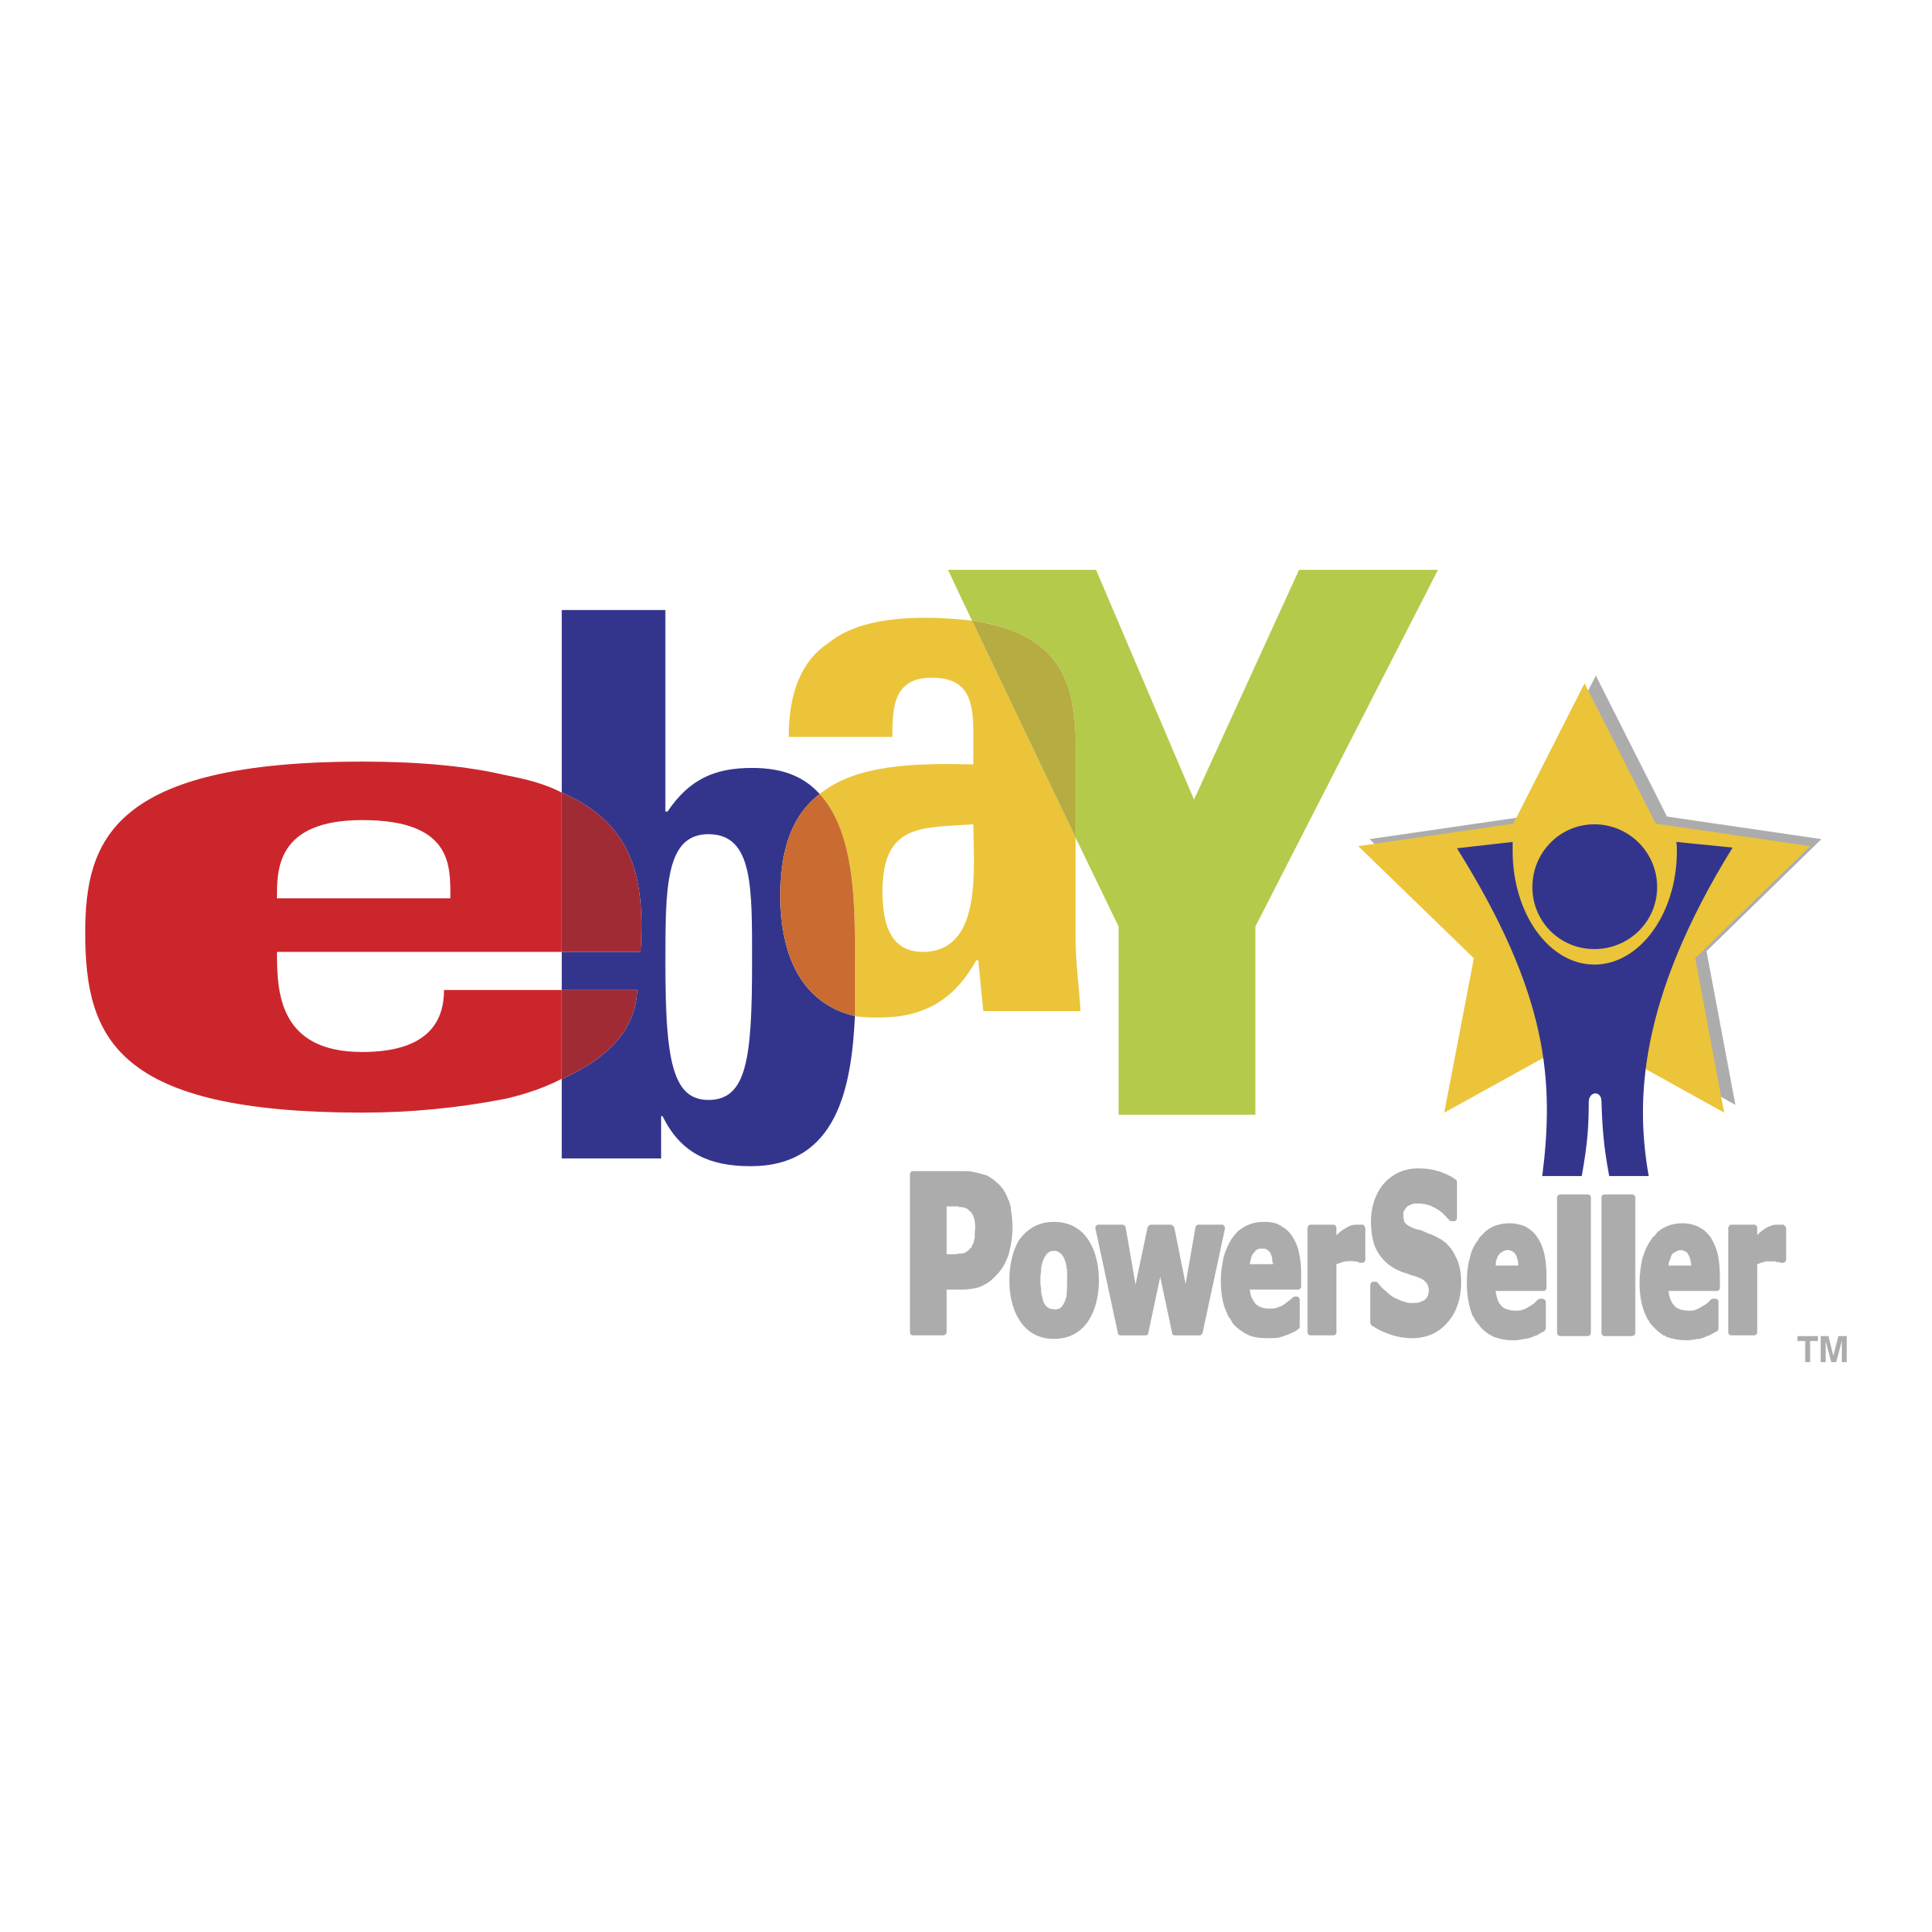 Vektor eBay Logo transparente Bilder